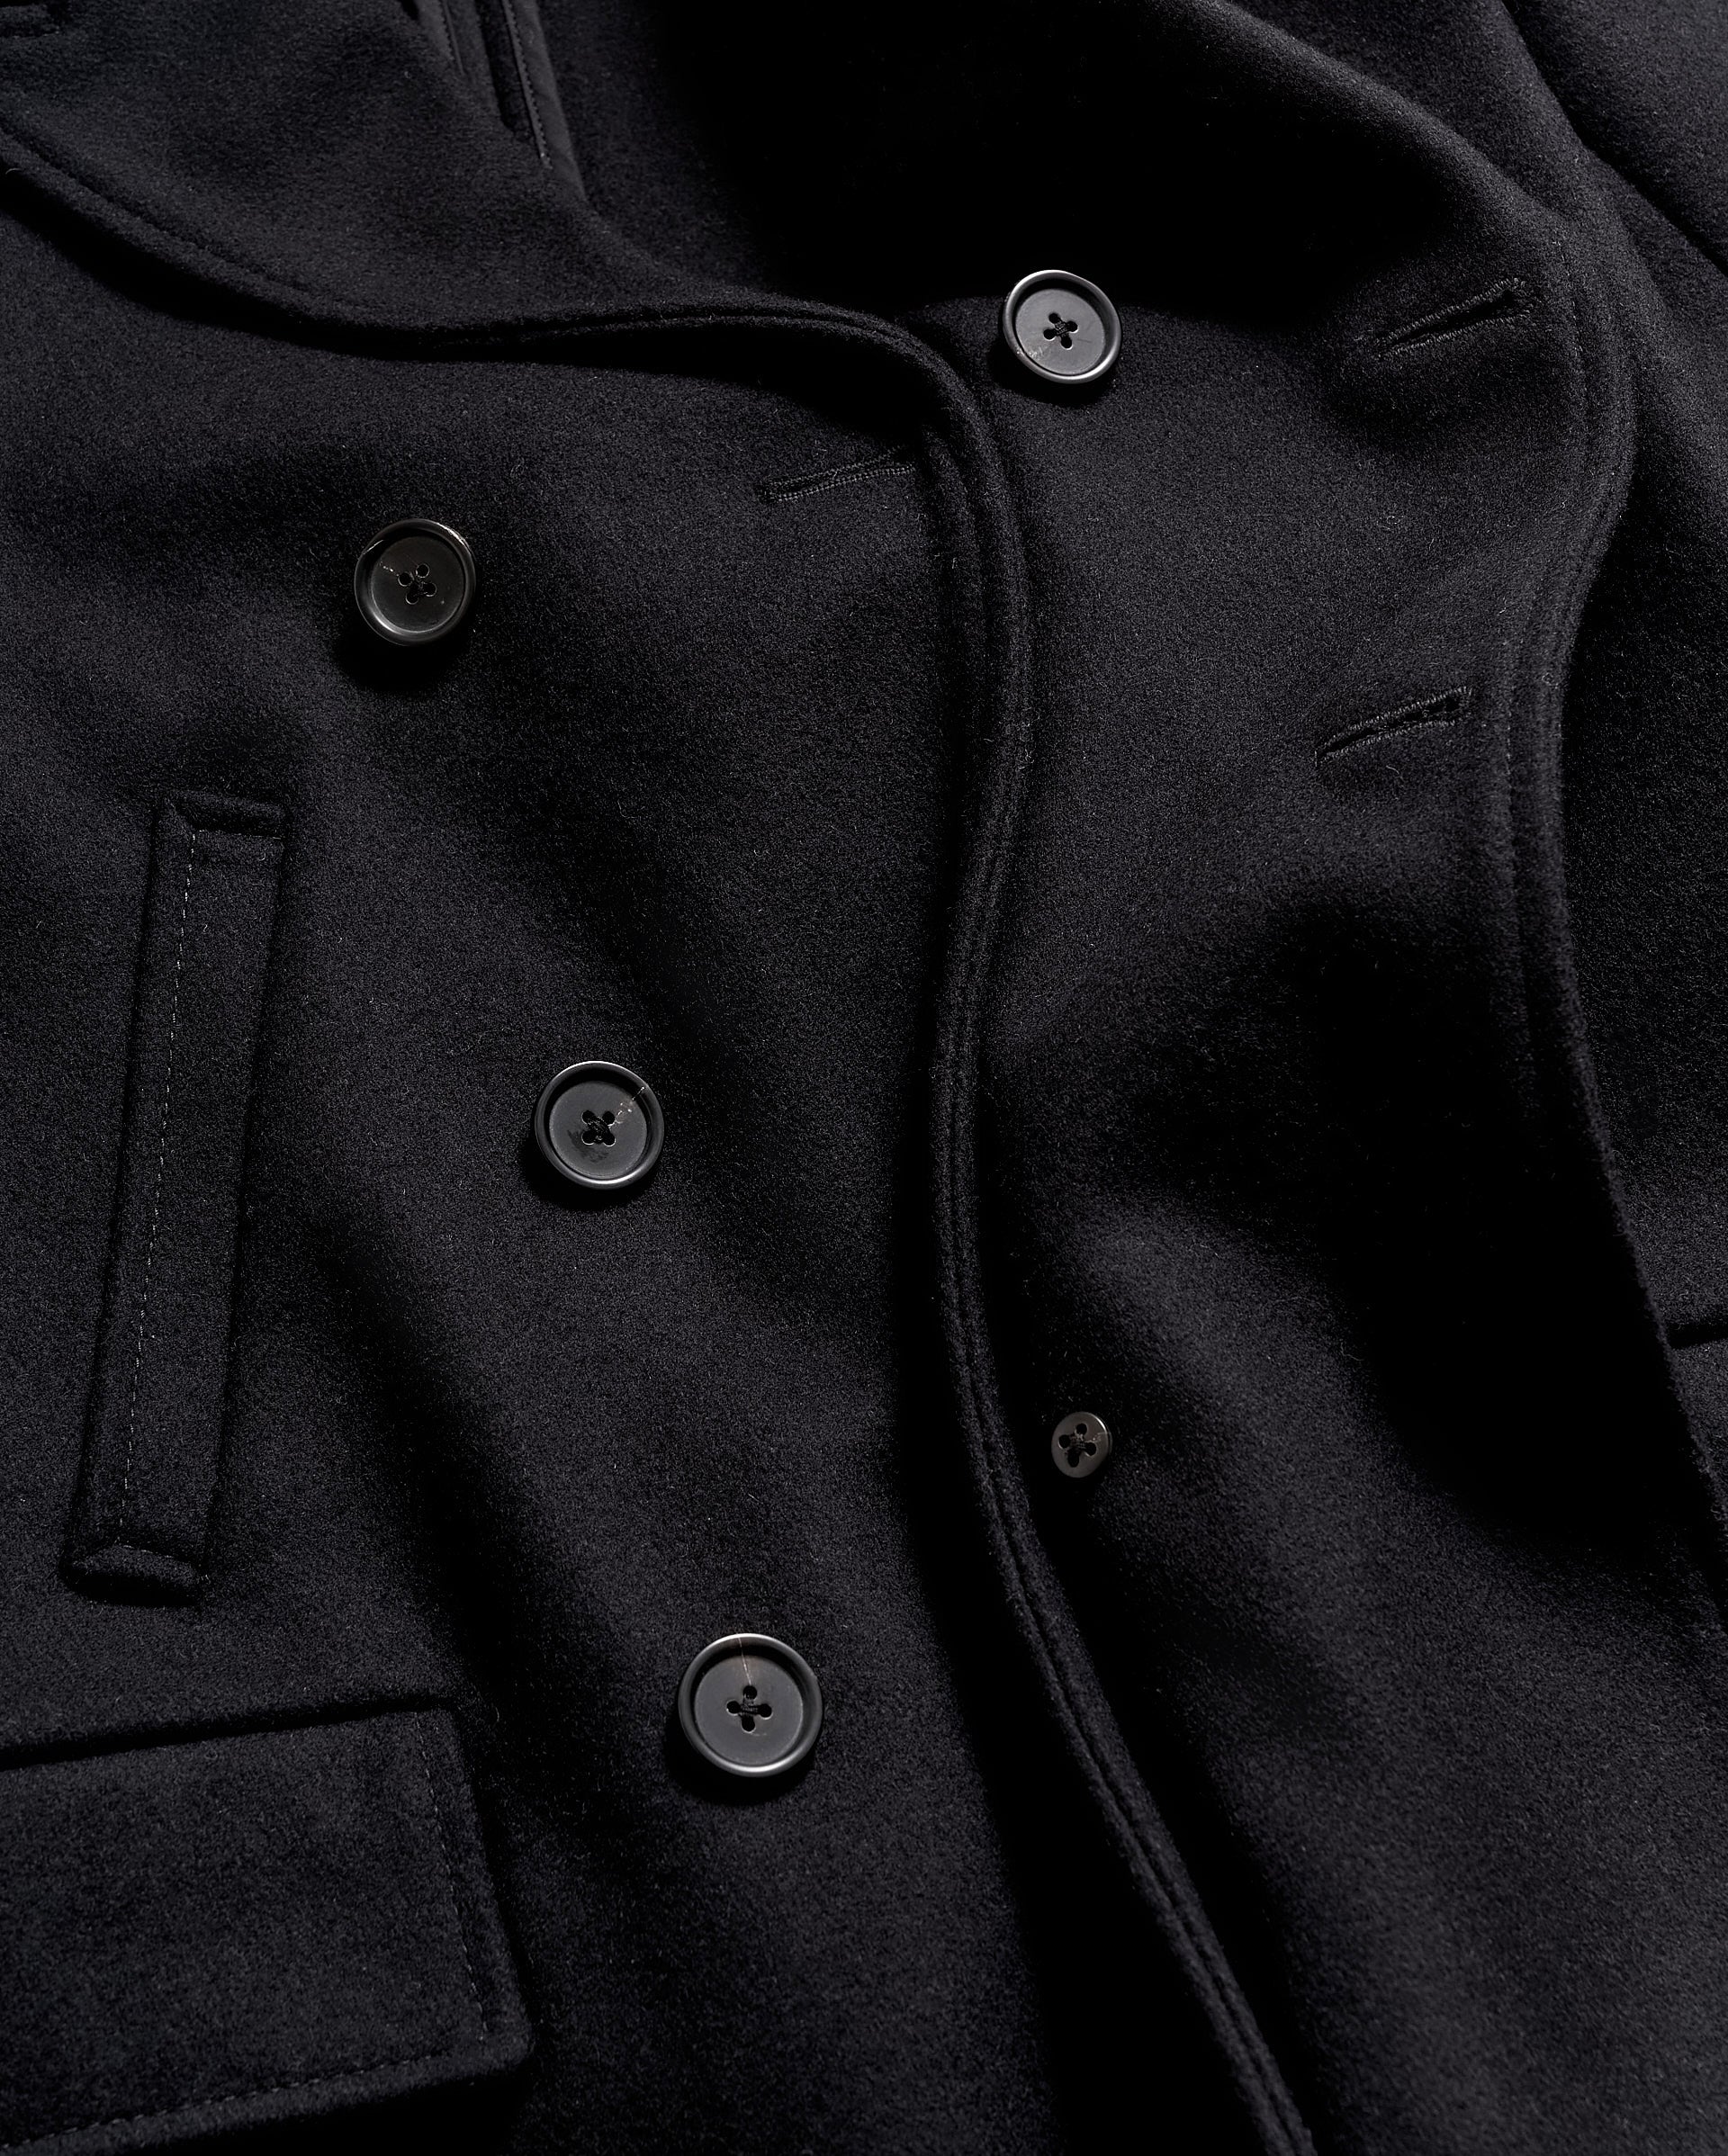 Mush Editions Mens Leather Black Winter Trench Coat - Full Length Overcoat Xs / Black